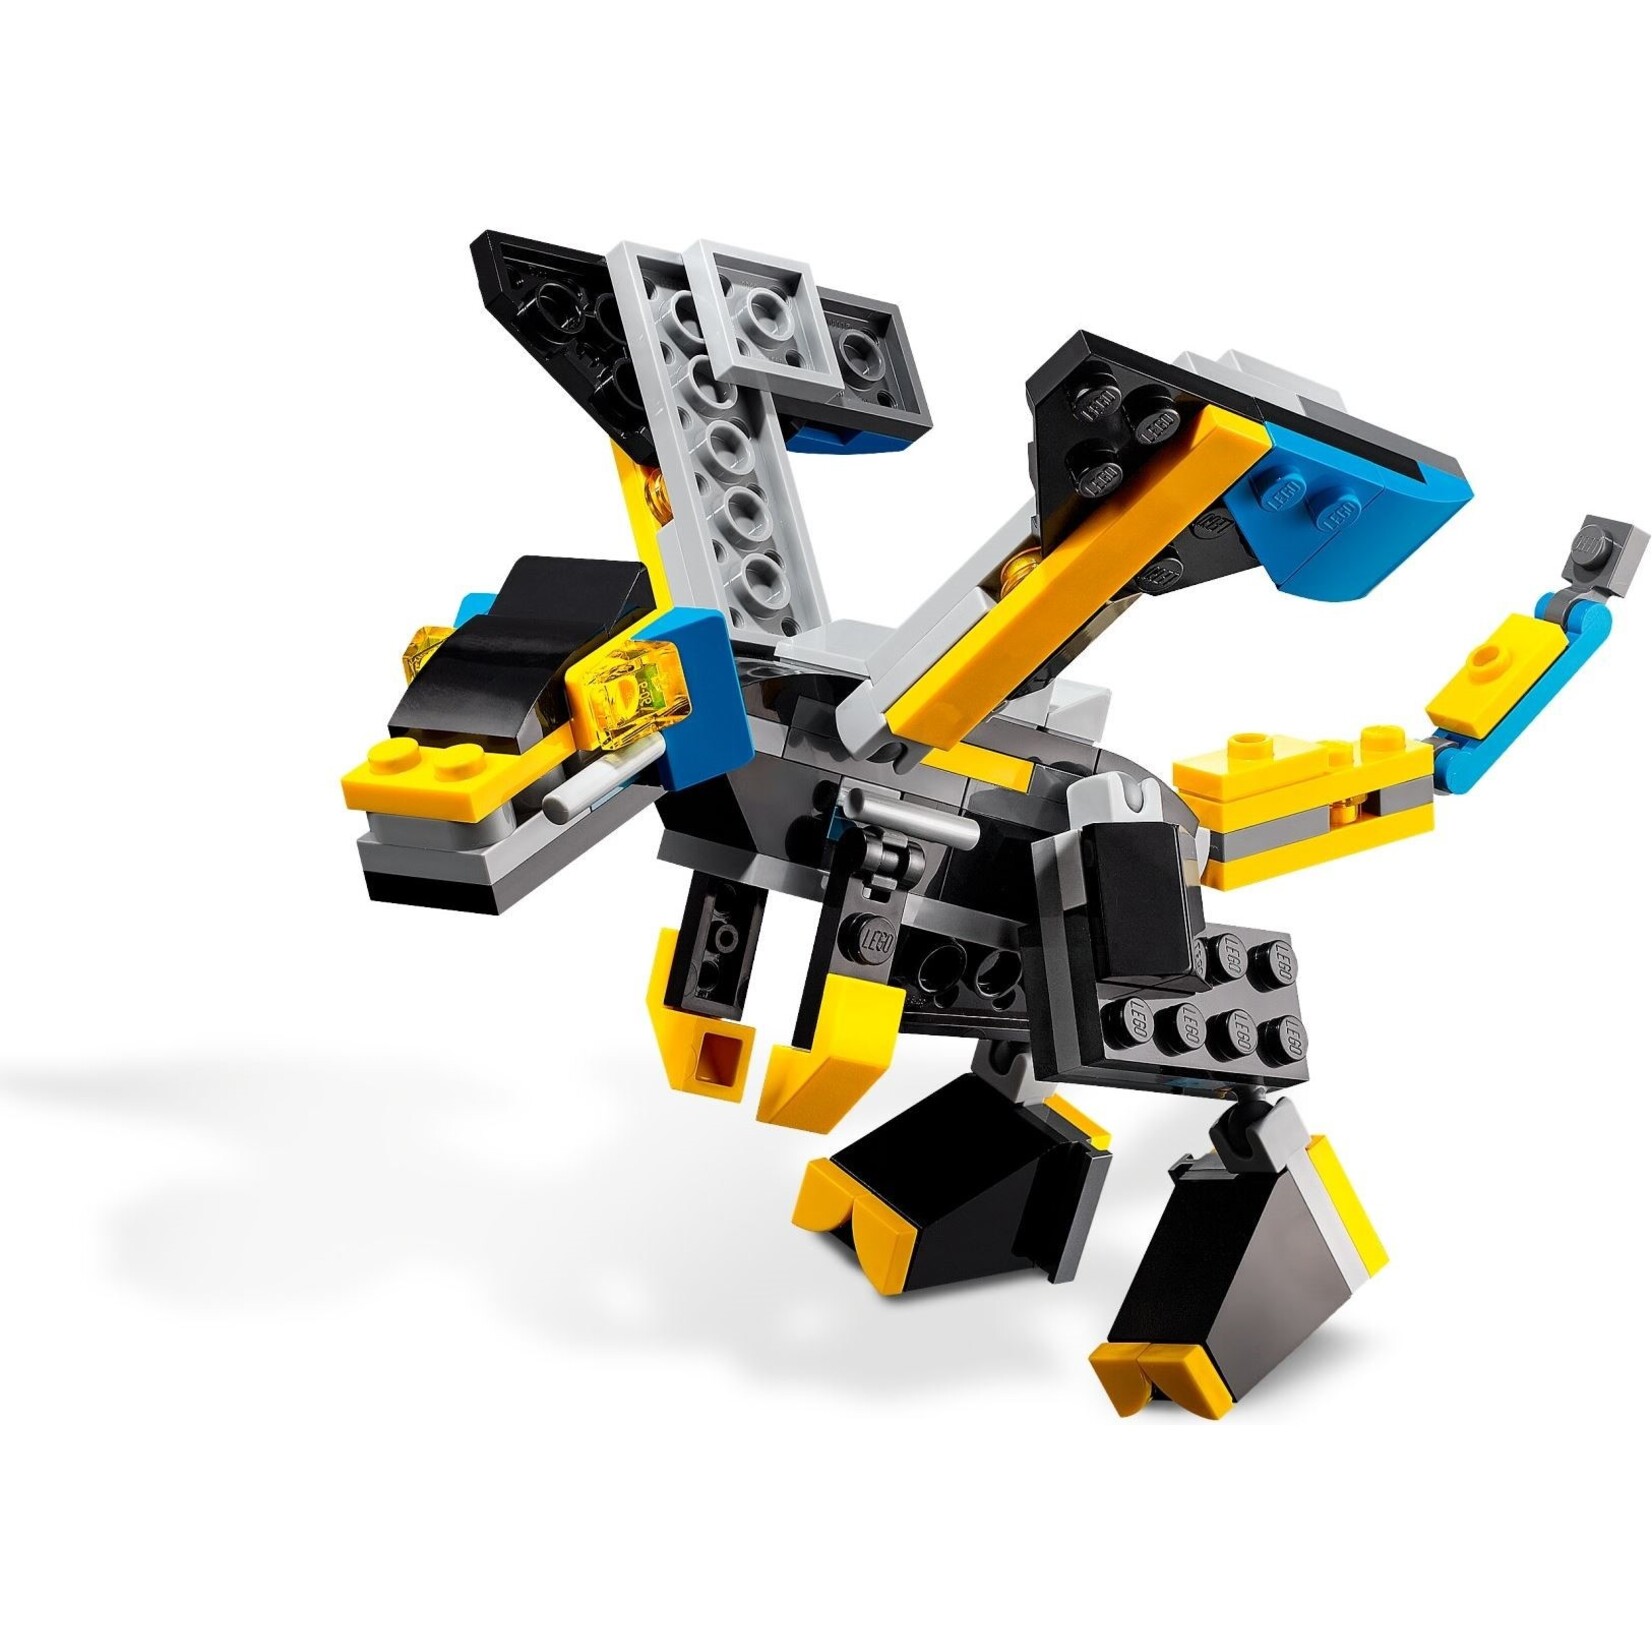 LEGO Superrobot - 31124